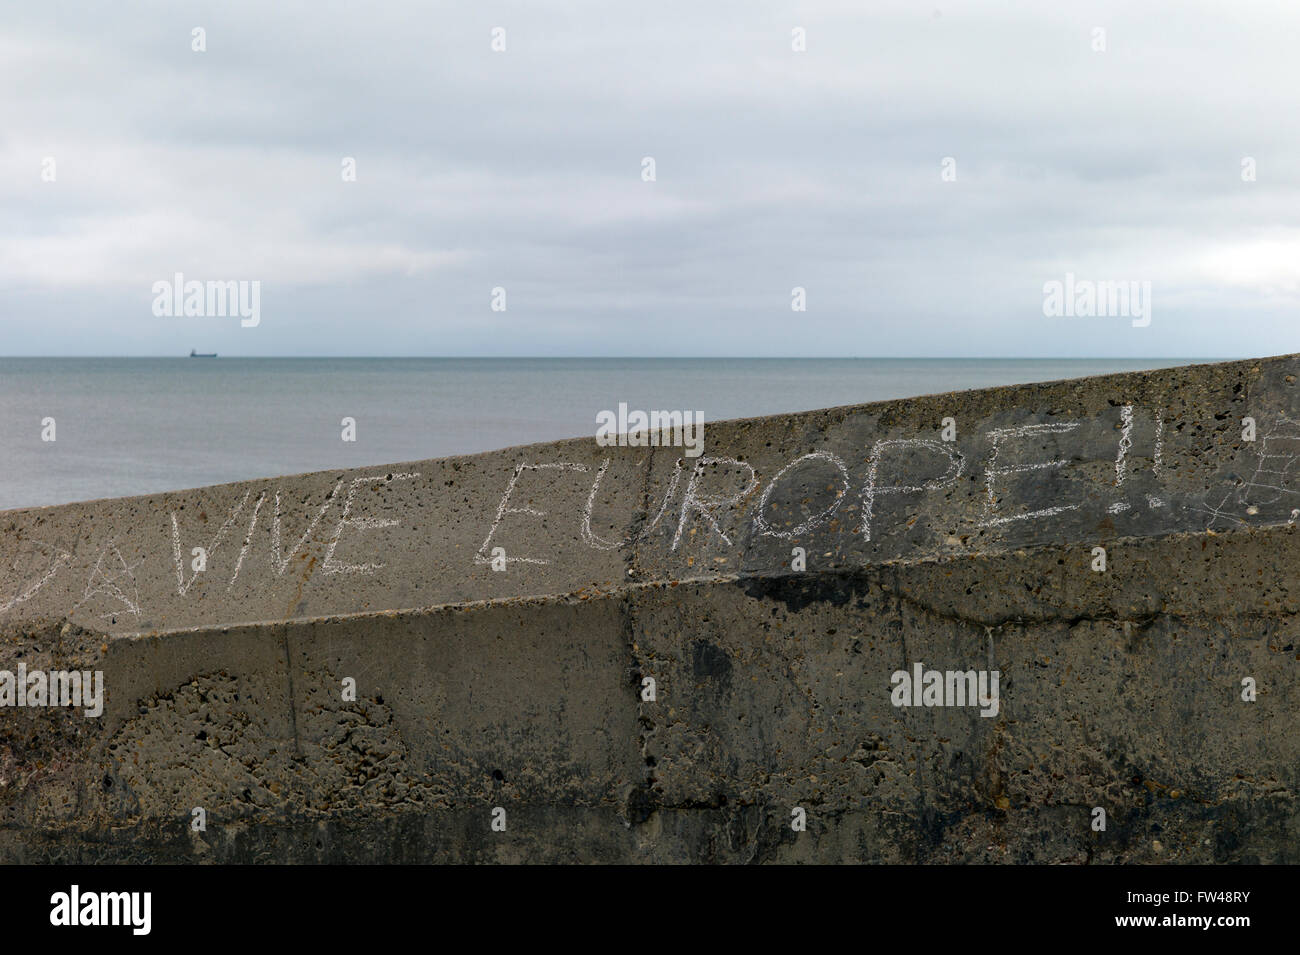 Chalk graffiti on seaside groyne, 'Vive Europe' Stock Photo